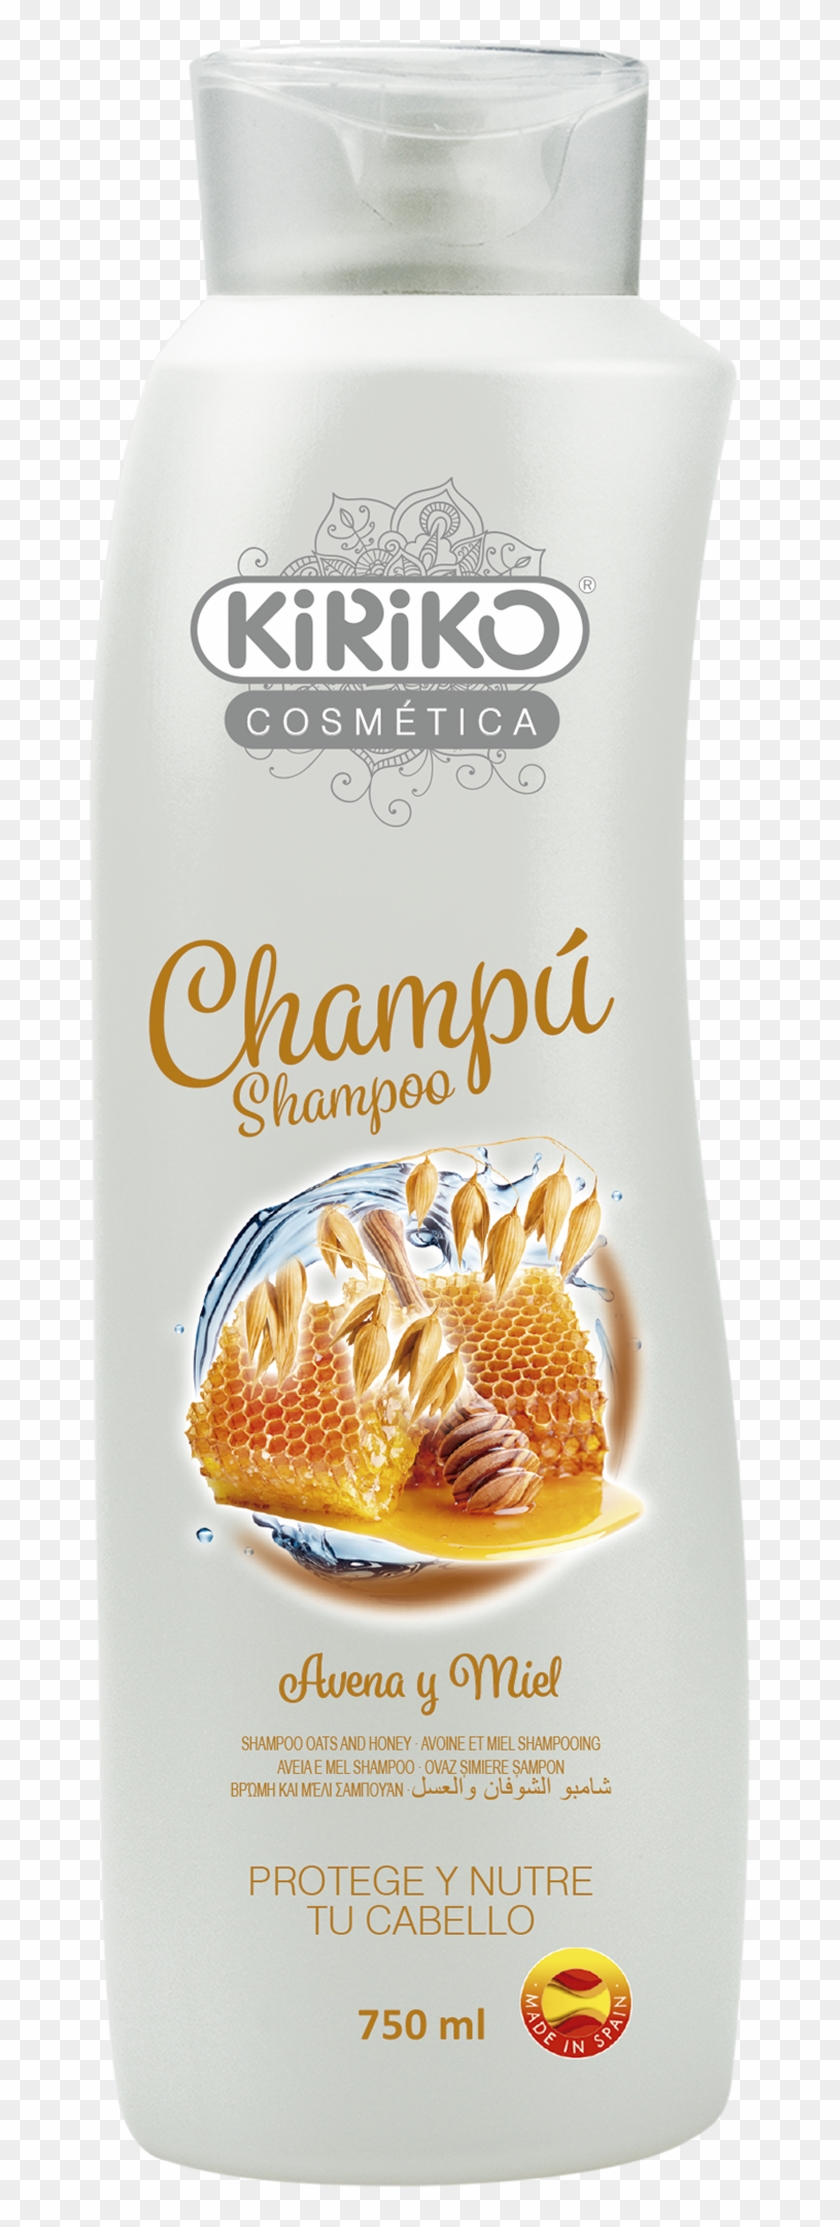 Oatmeal & Honey Shampoo - Kiriko Clipart #3907023